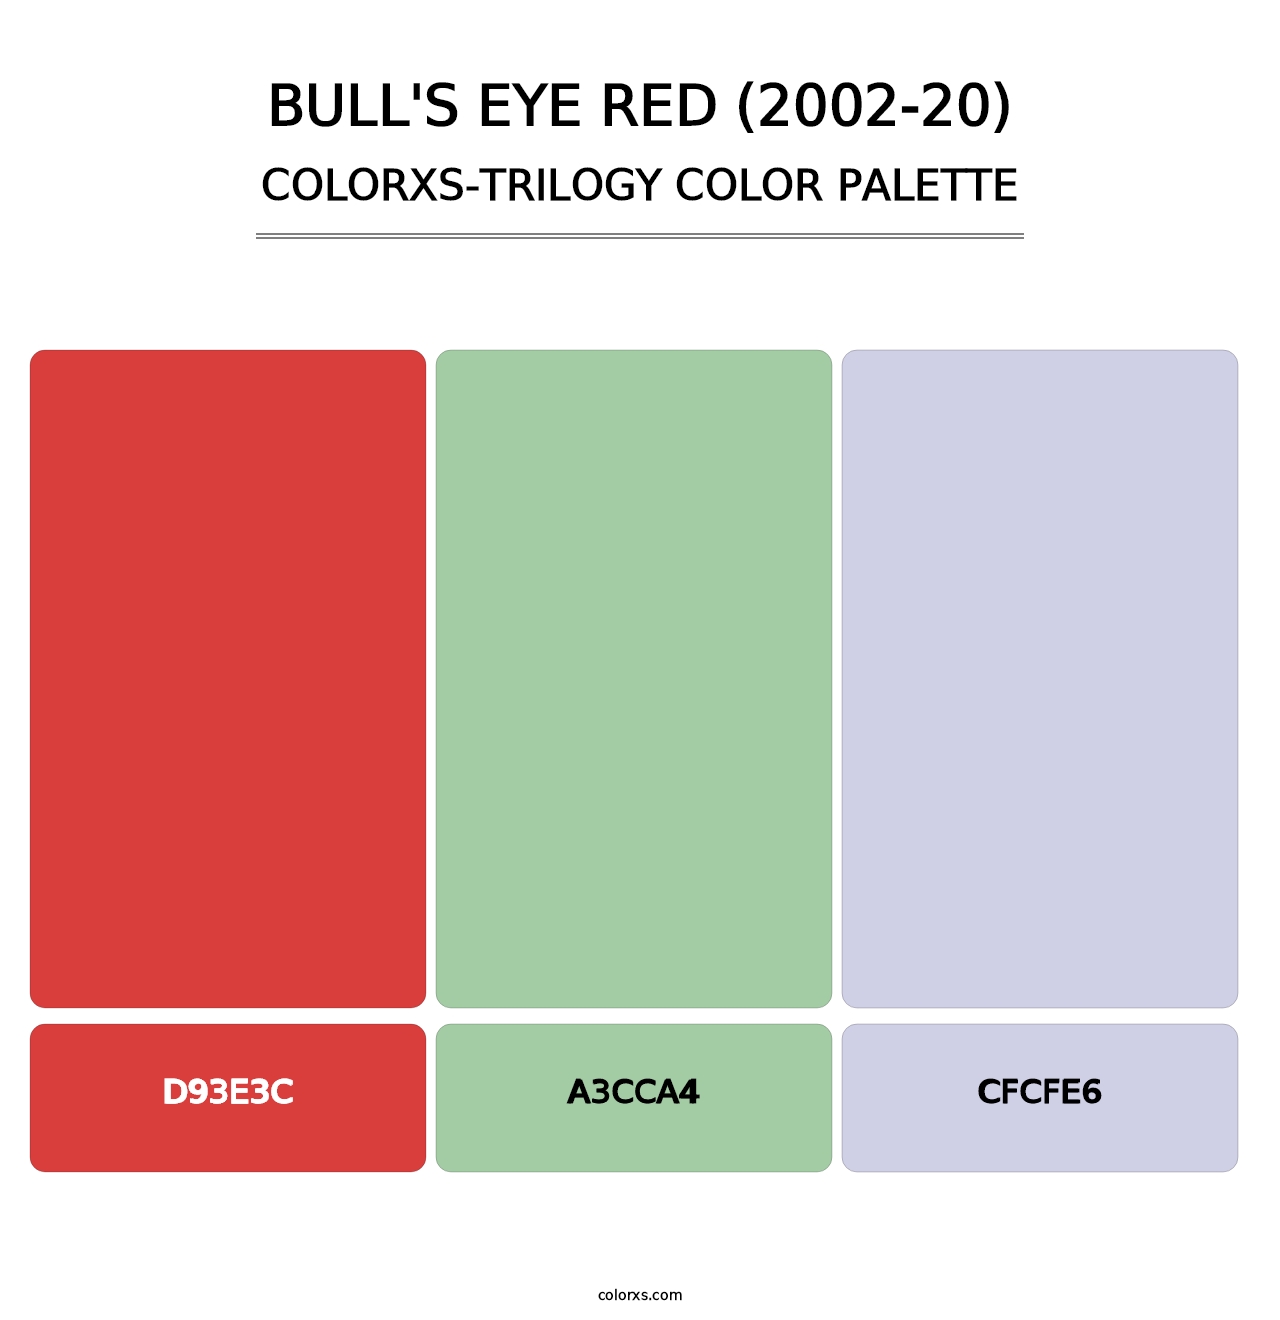 Bull's Eye Red (2002-20) - Colorxs Trilogy Palette